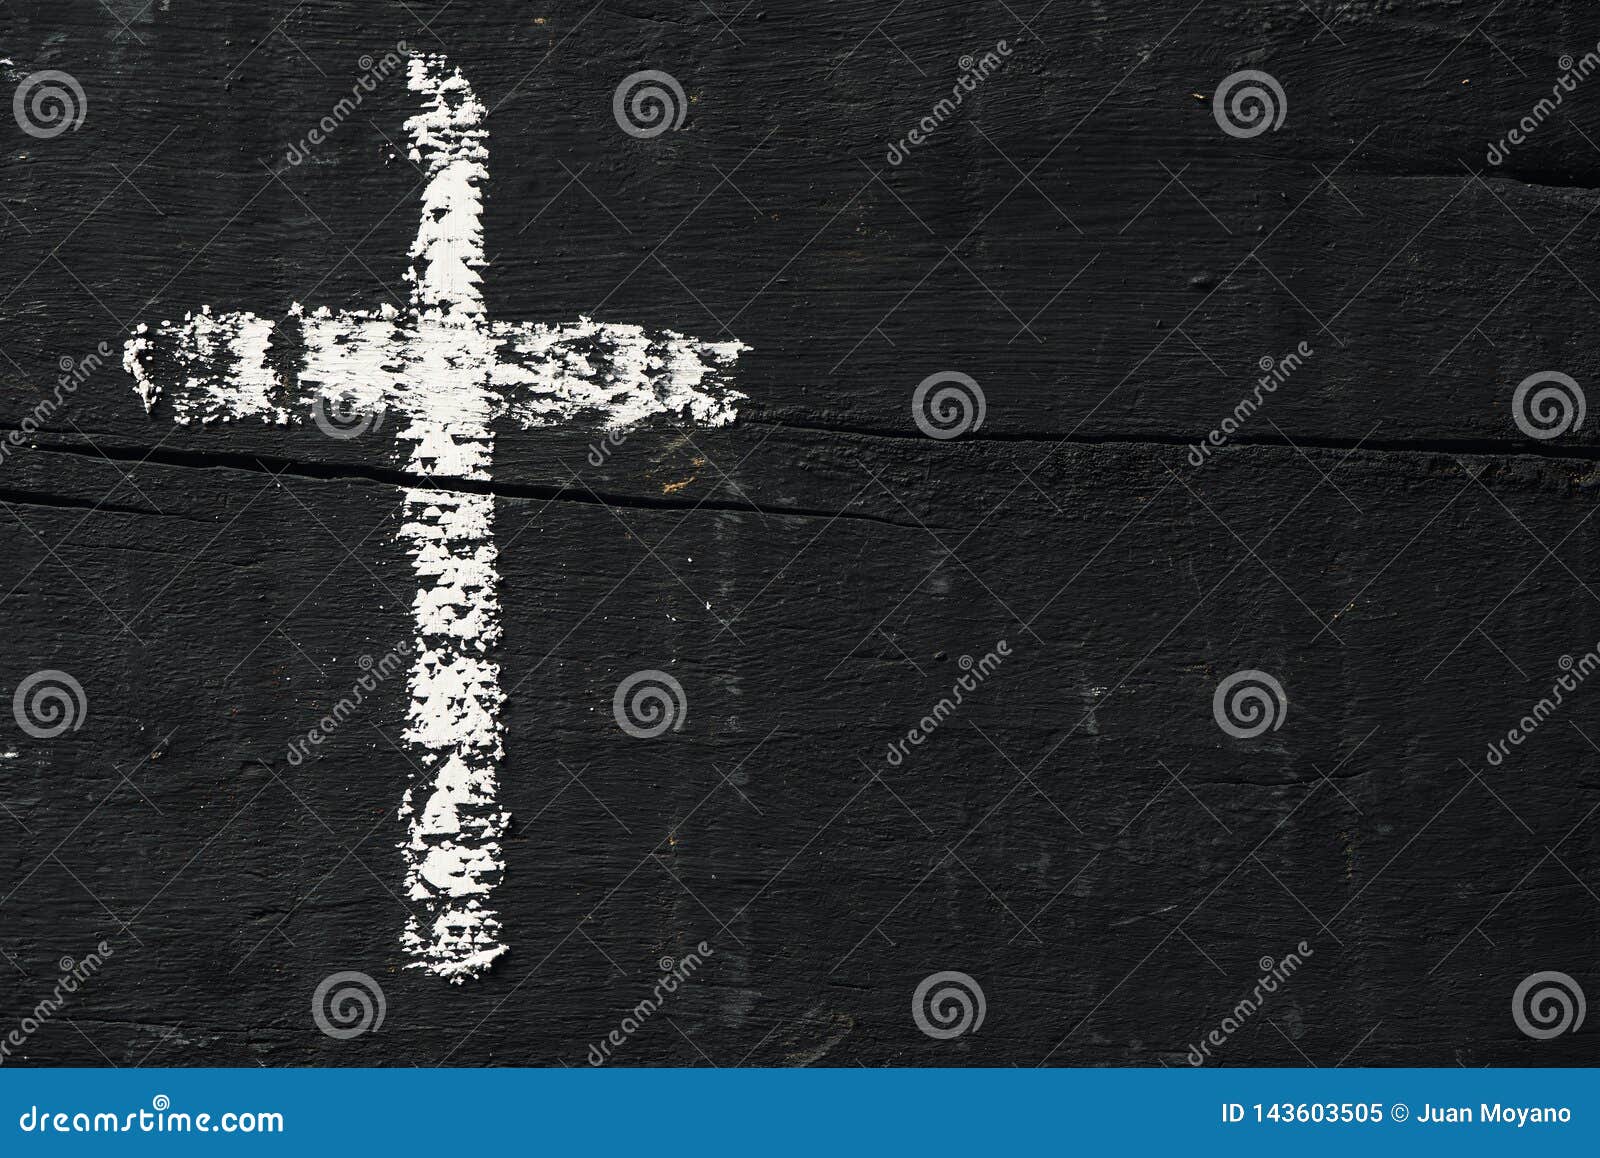 christian cross on a dark gray wooden surface